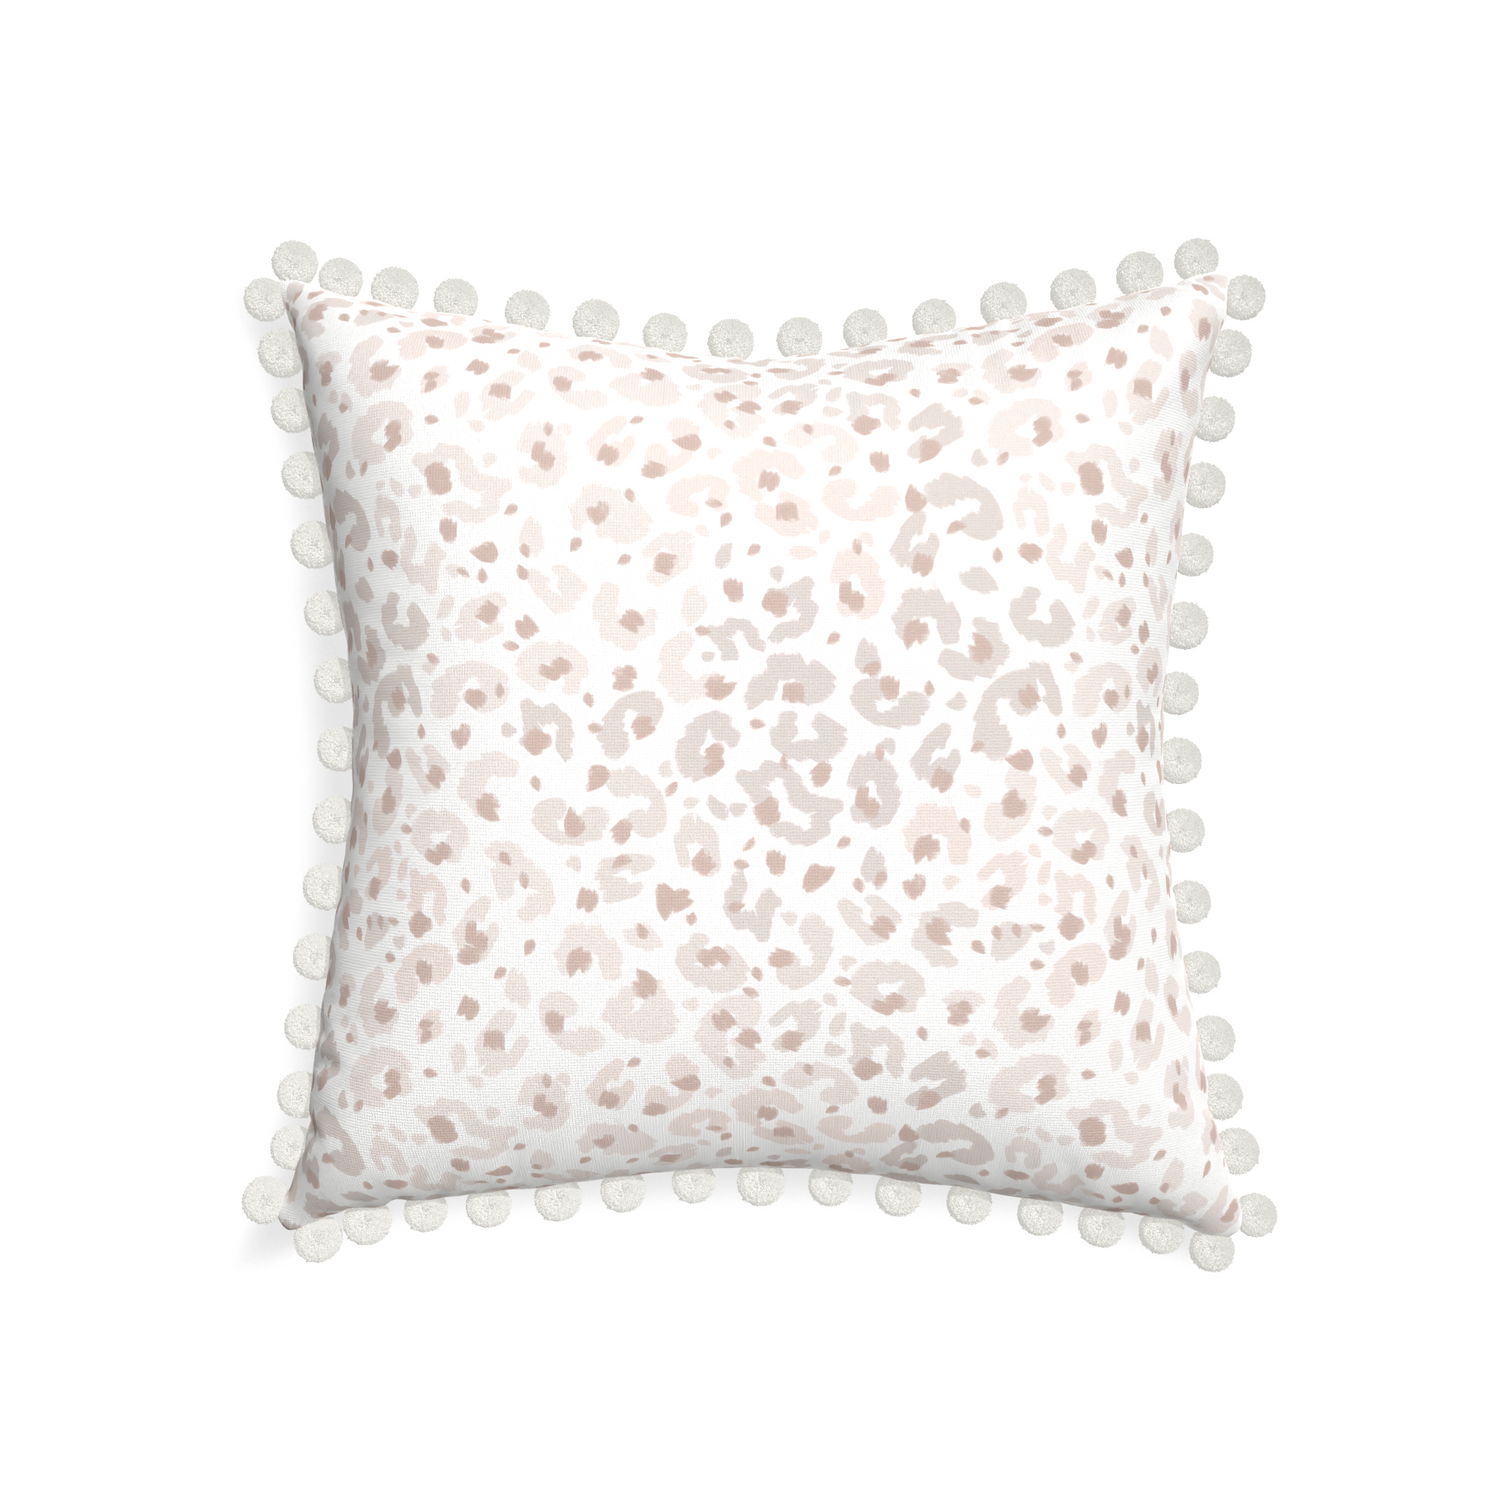 22-square rosie custom pillow with snow pom pom on white background